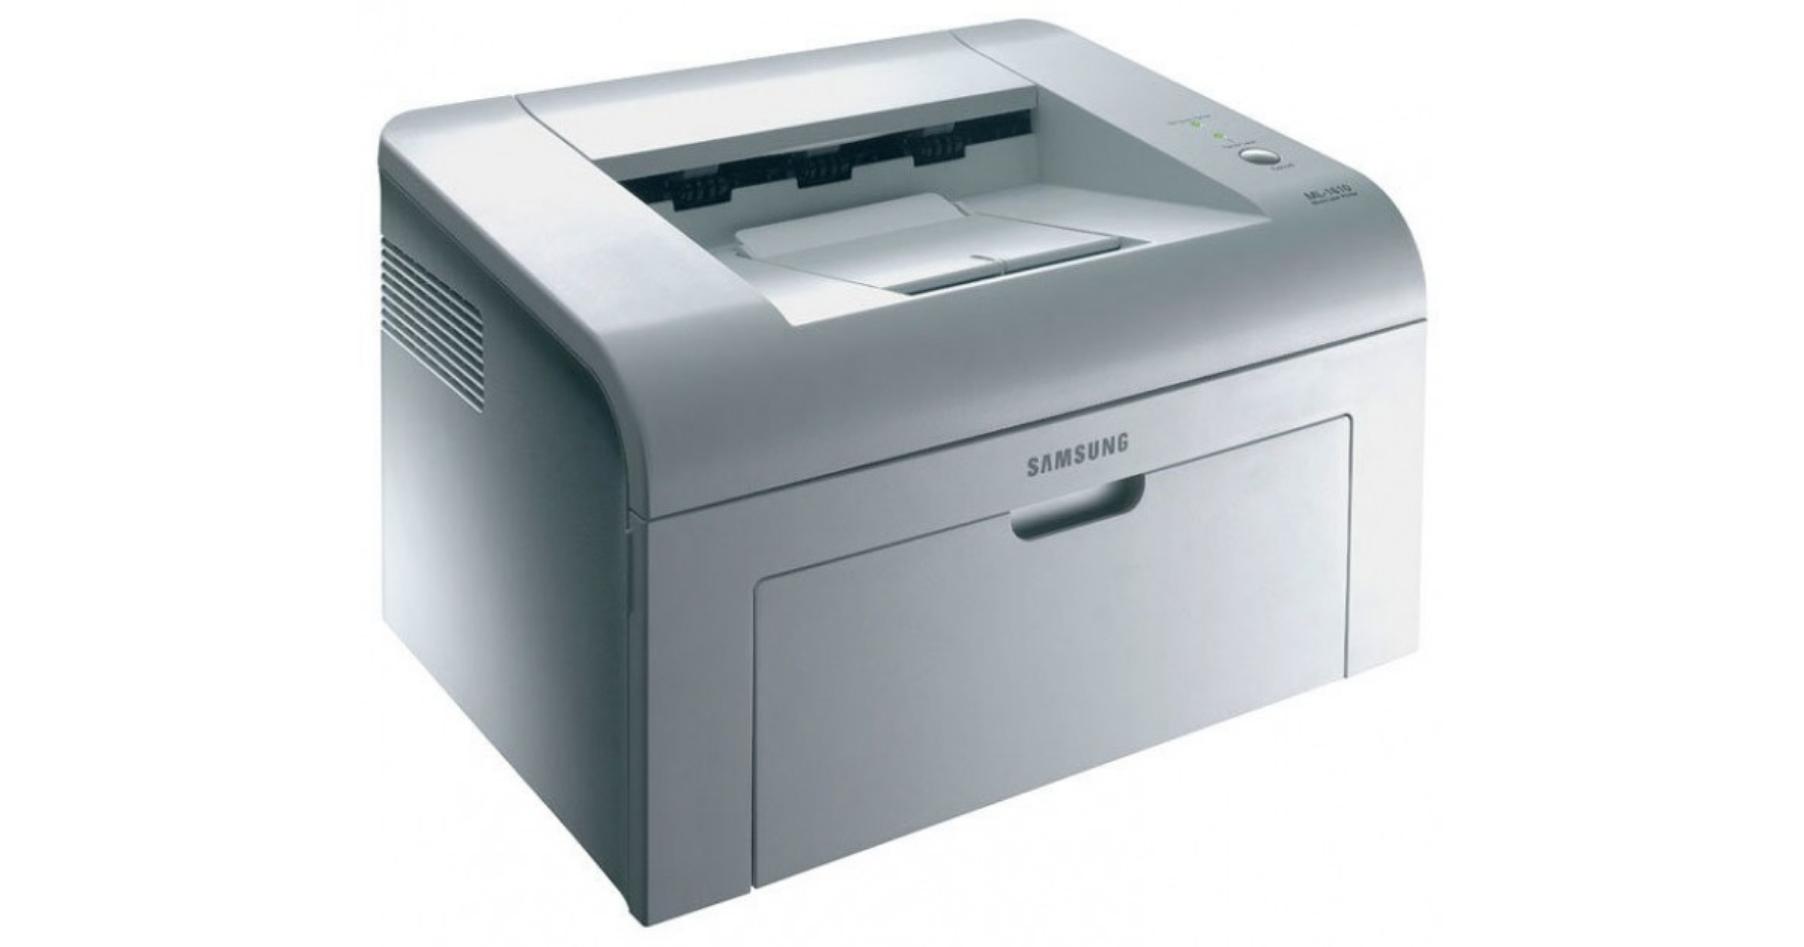 Ремонт принтера самсунг цена. Samsung ml 1615. Принтер самсунг мл 2010. Принтер самсунг 1615. Лазерный принтер самсунг ml-1615.